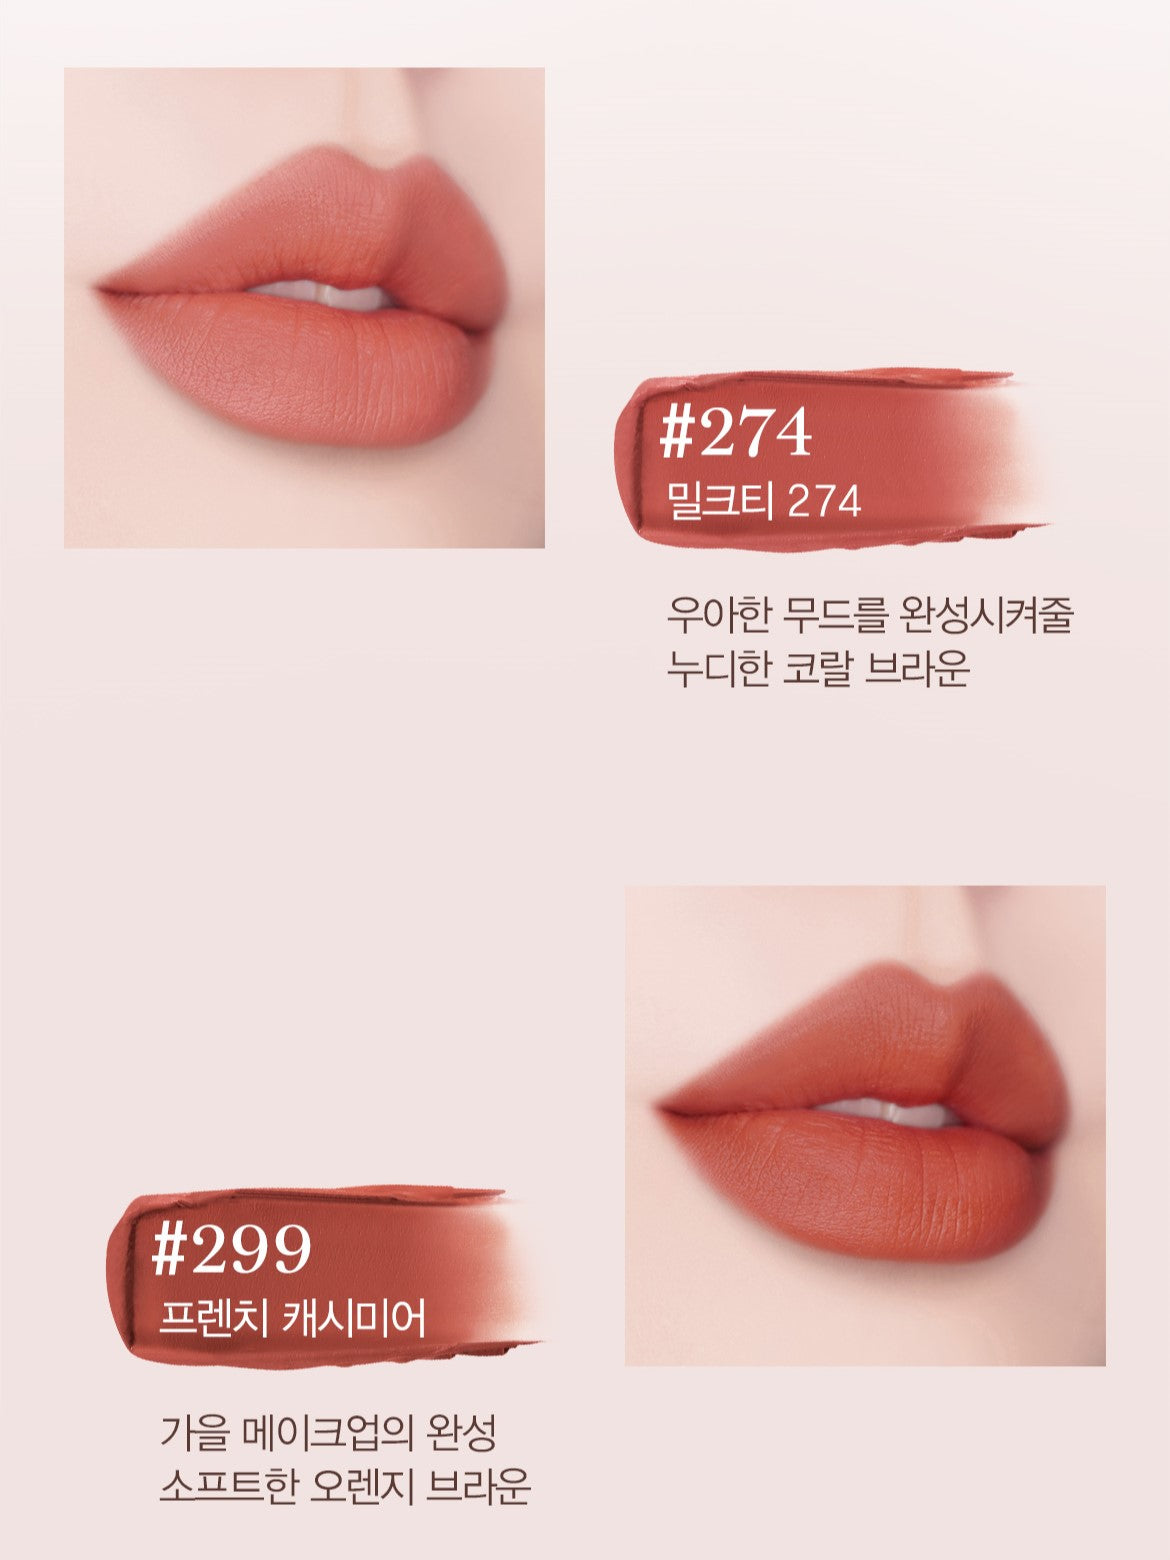 Son LANCÔME L'Absolu Rouge Intimatte Lipstick #218 Petite Maille